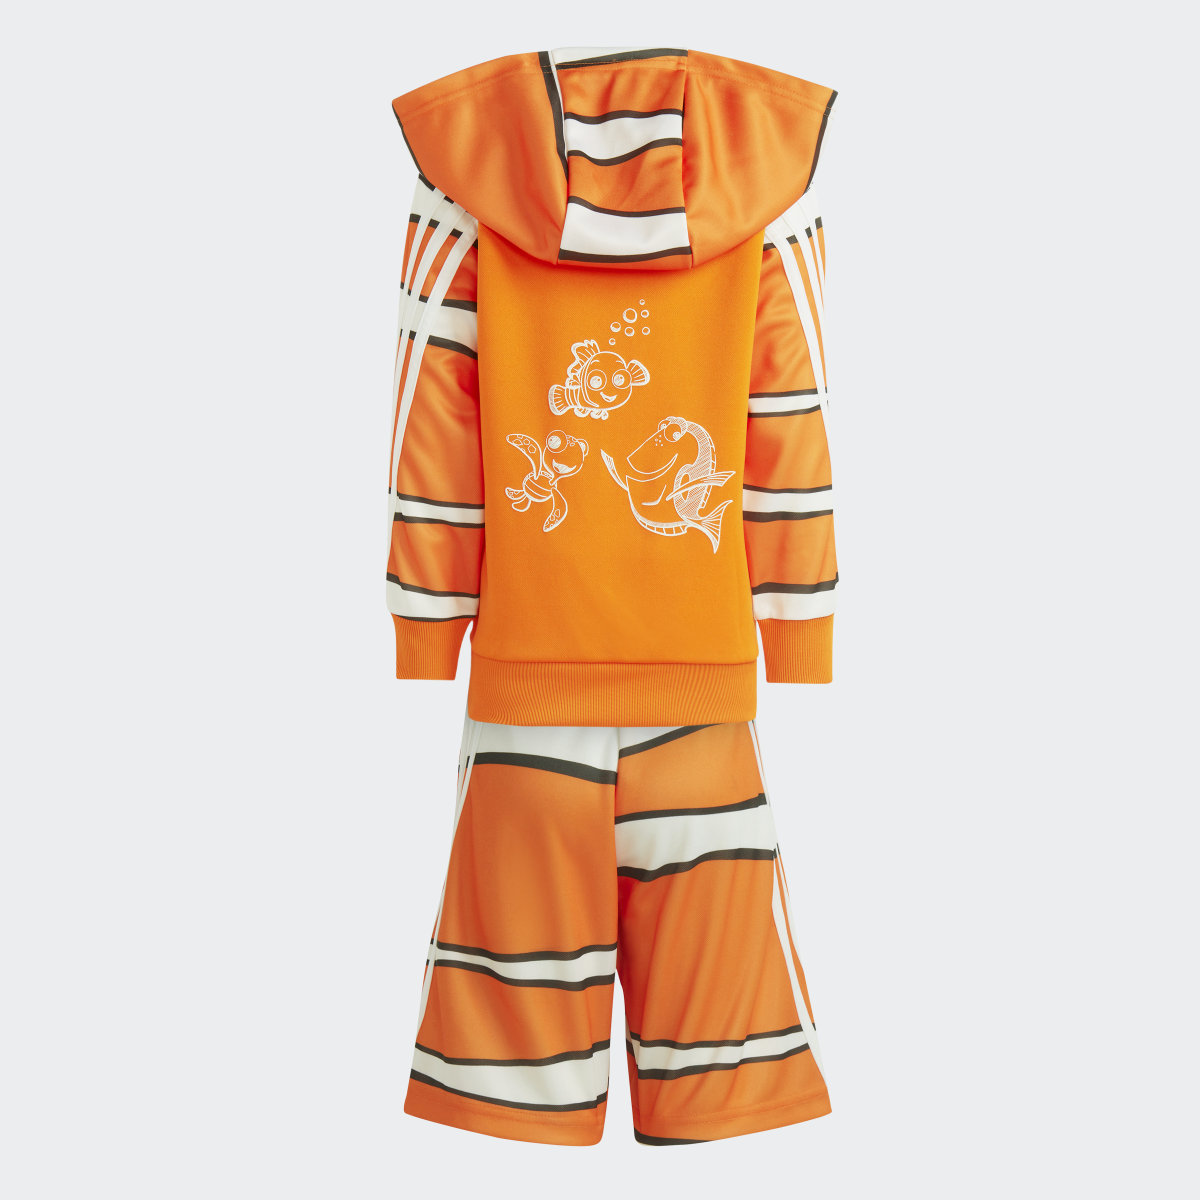 Adidas Findet Nemo Full-Zip Trainingsjacke. 6